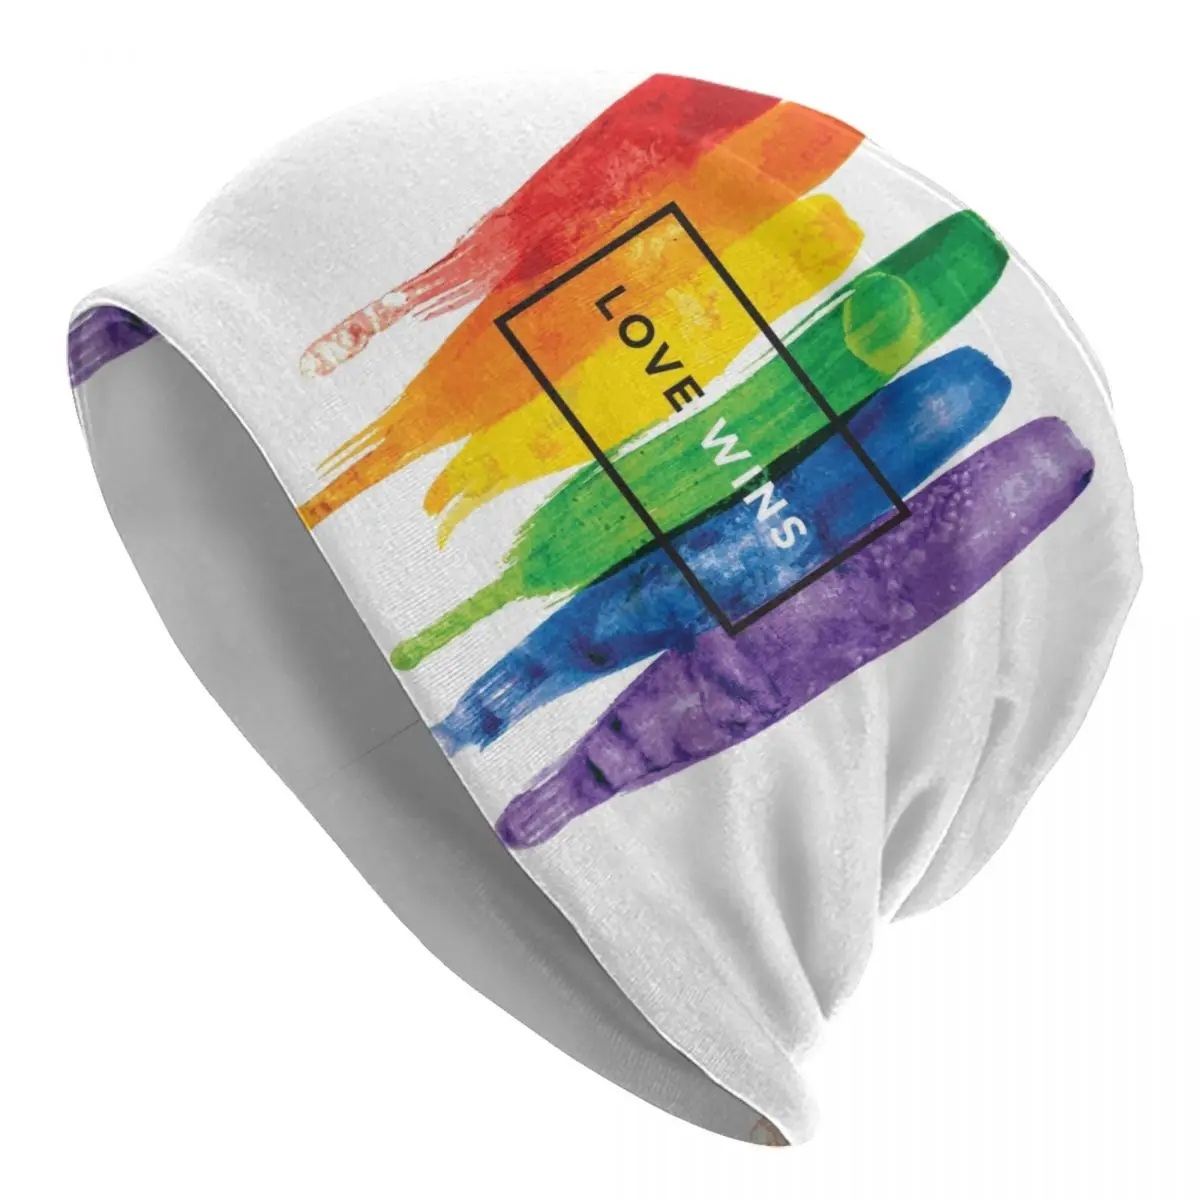 

LGBT Love Wins Rainbow Paint GLBT Bonnet Hats Fashion Knit Hat For Men Women Winter Warm Lesbian Gay Pride Skullies Beanies Caps